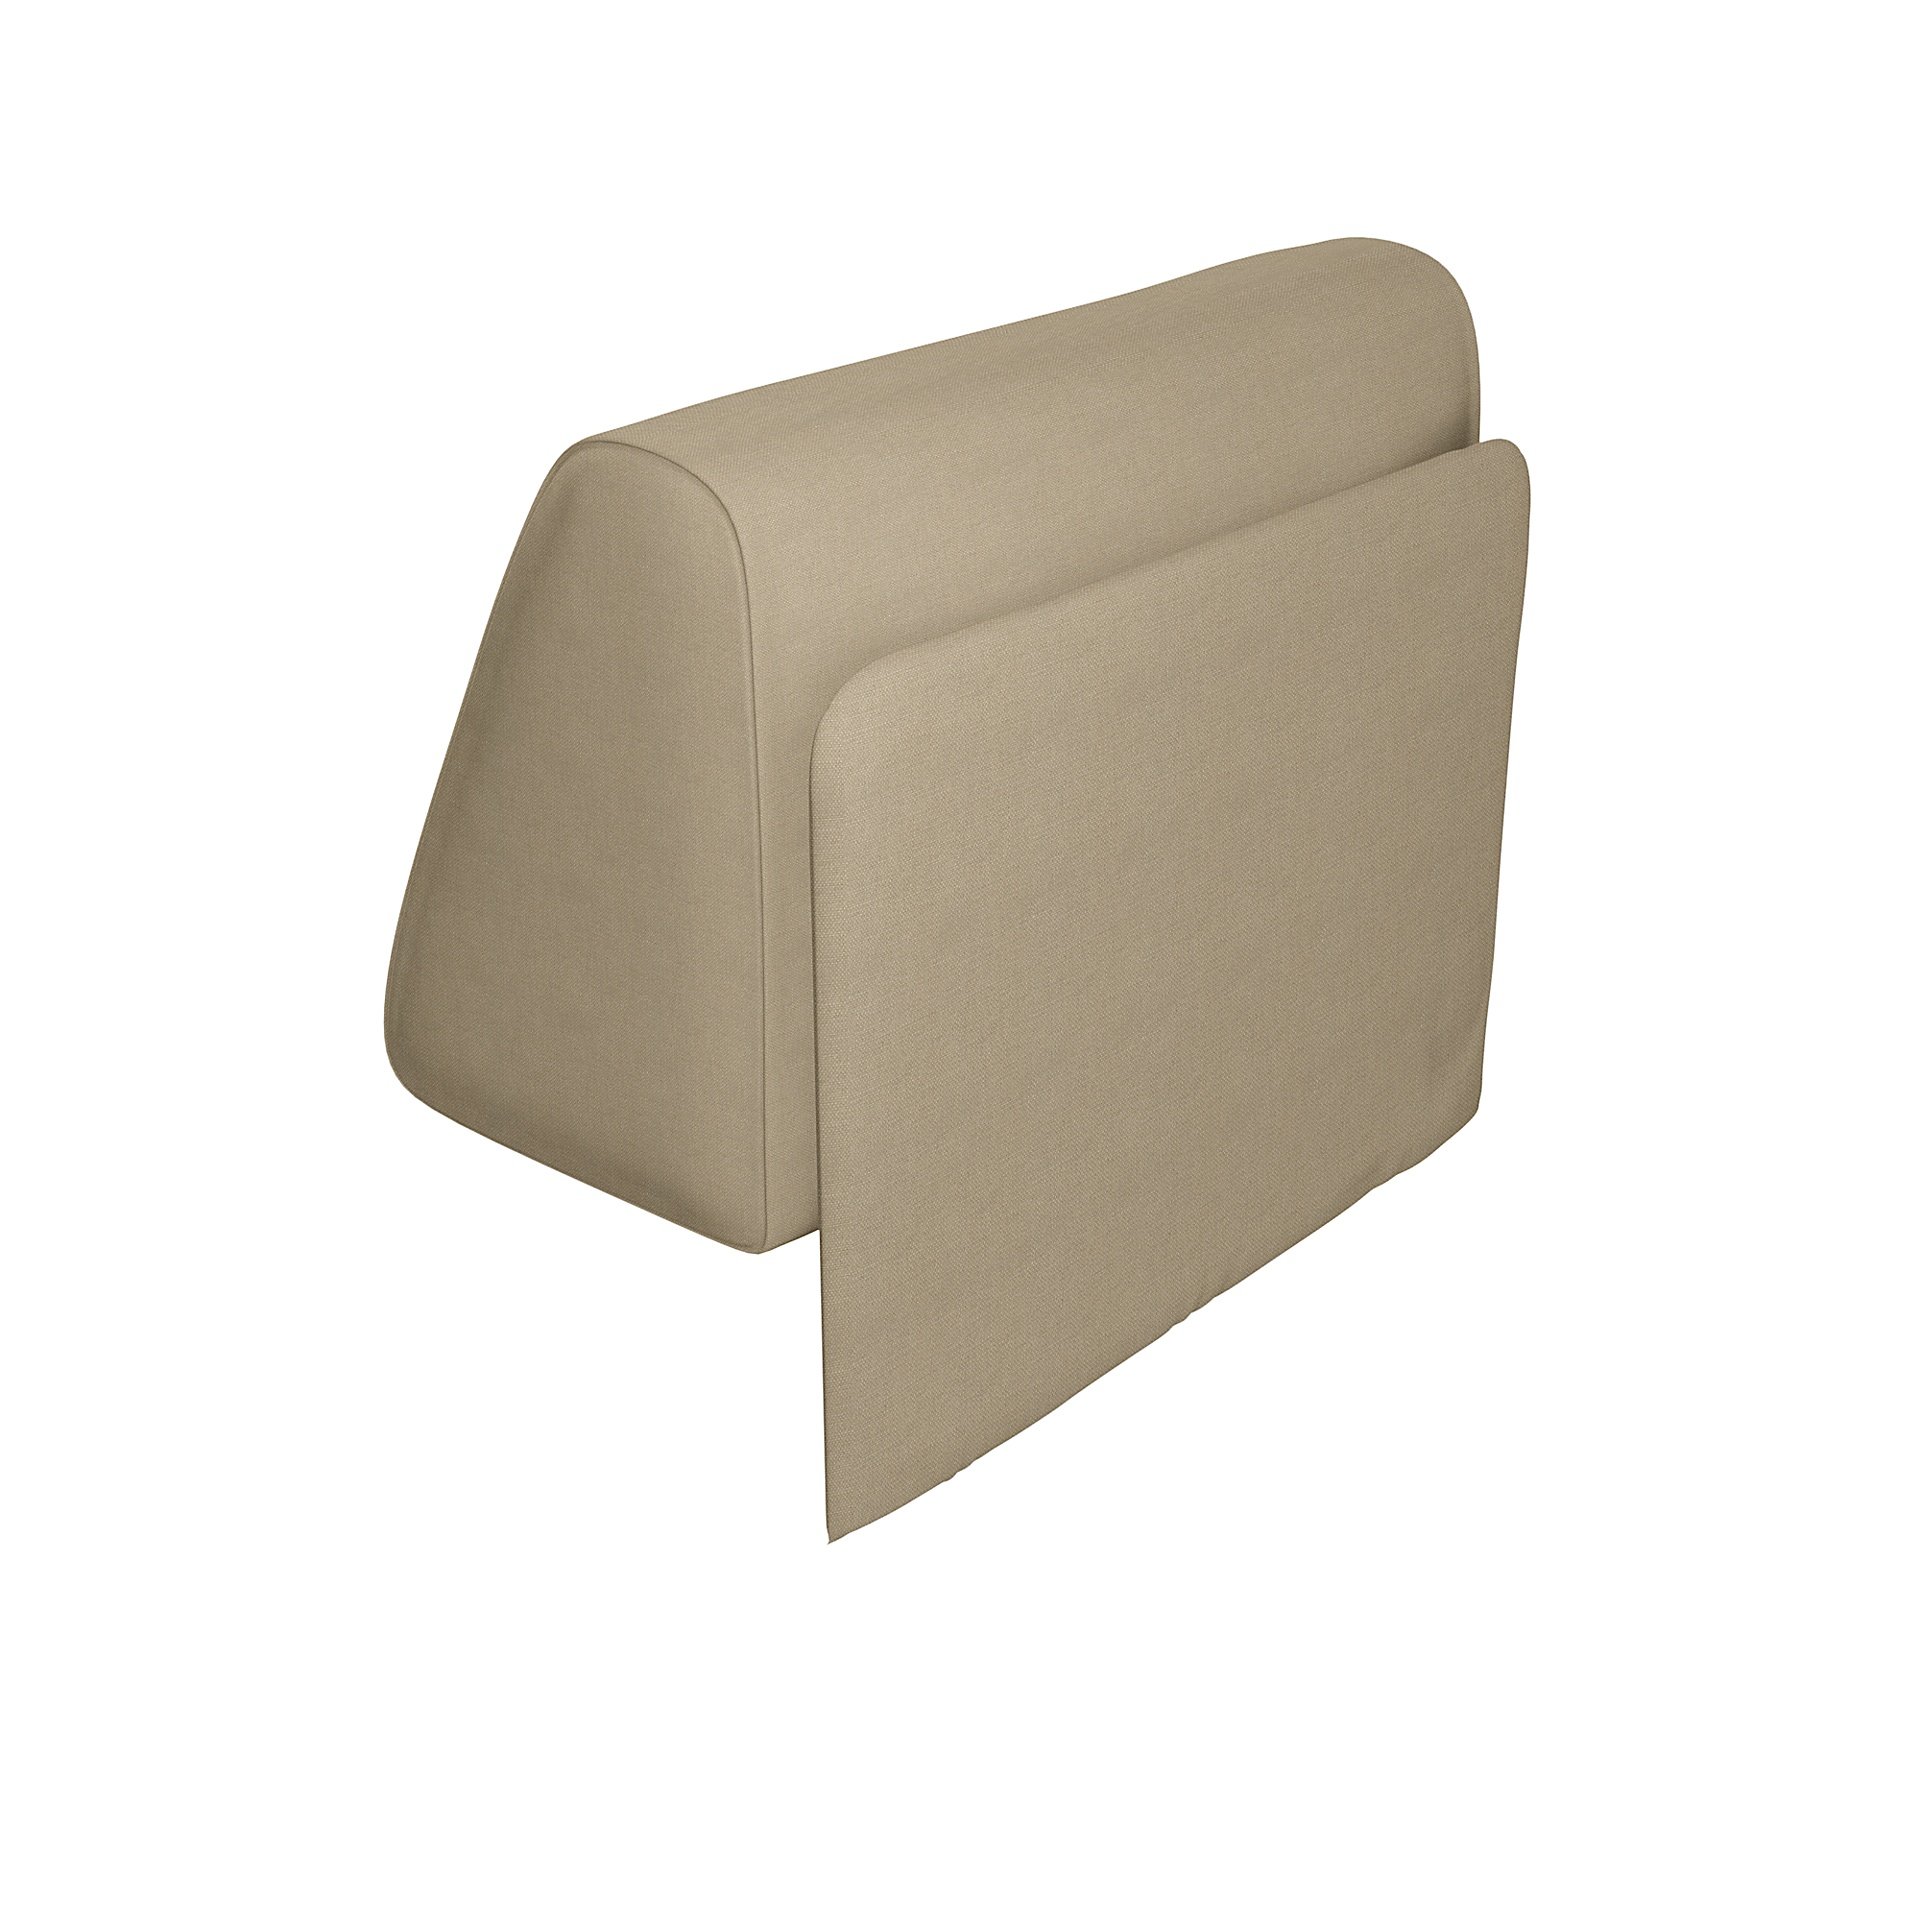 IKEA - Delaktig Backrest with Cushion Cover, Tan, Linen - Bemz